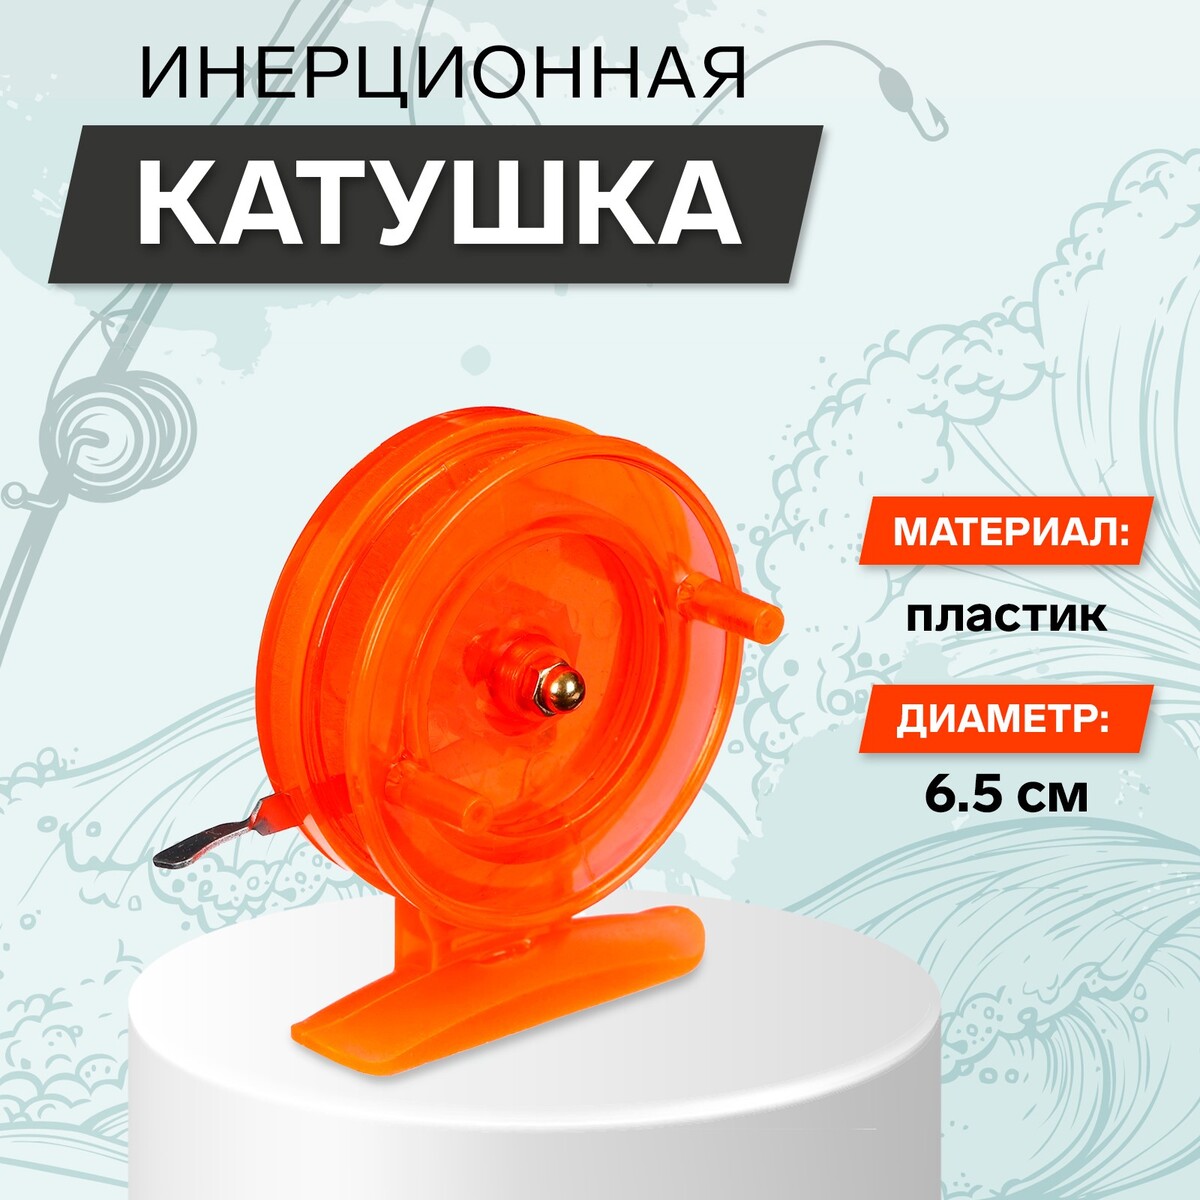 Катушка инерционная, пластик, диаметр 6.5 см, цвет оранжевый, 808s No brand